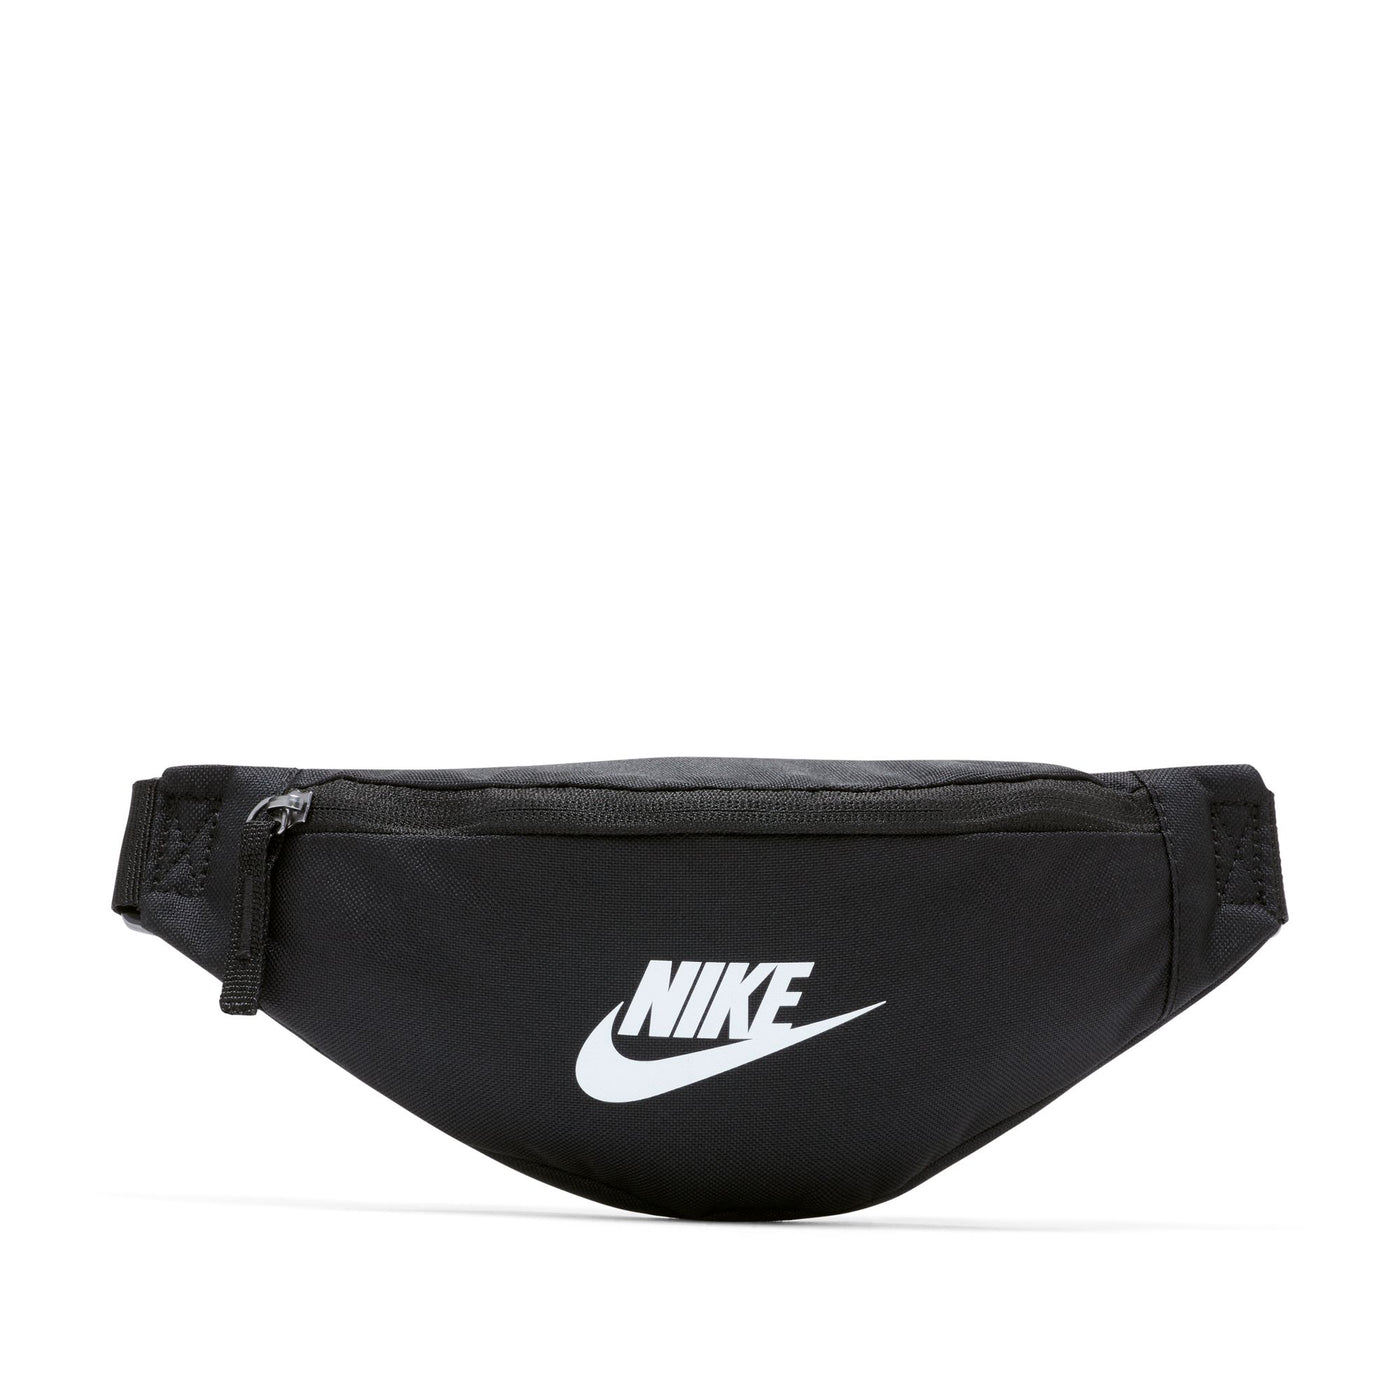 Nike 0488 - 010 Heritage Hüfttasche - black Hip Bag